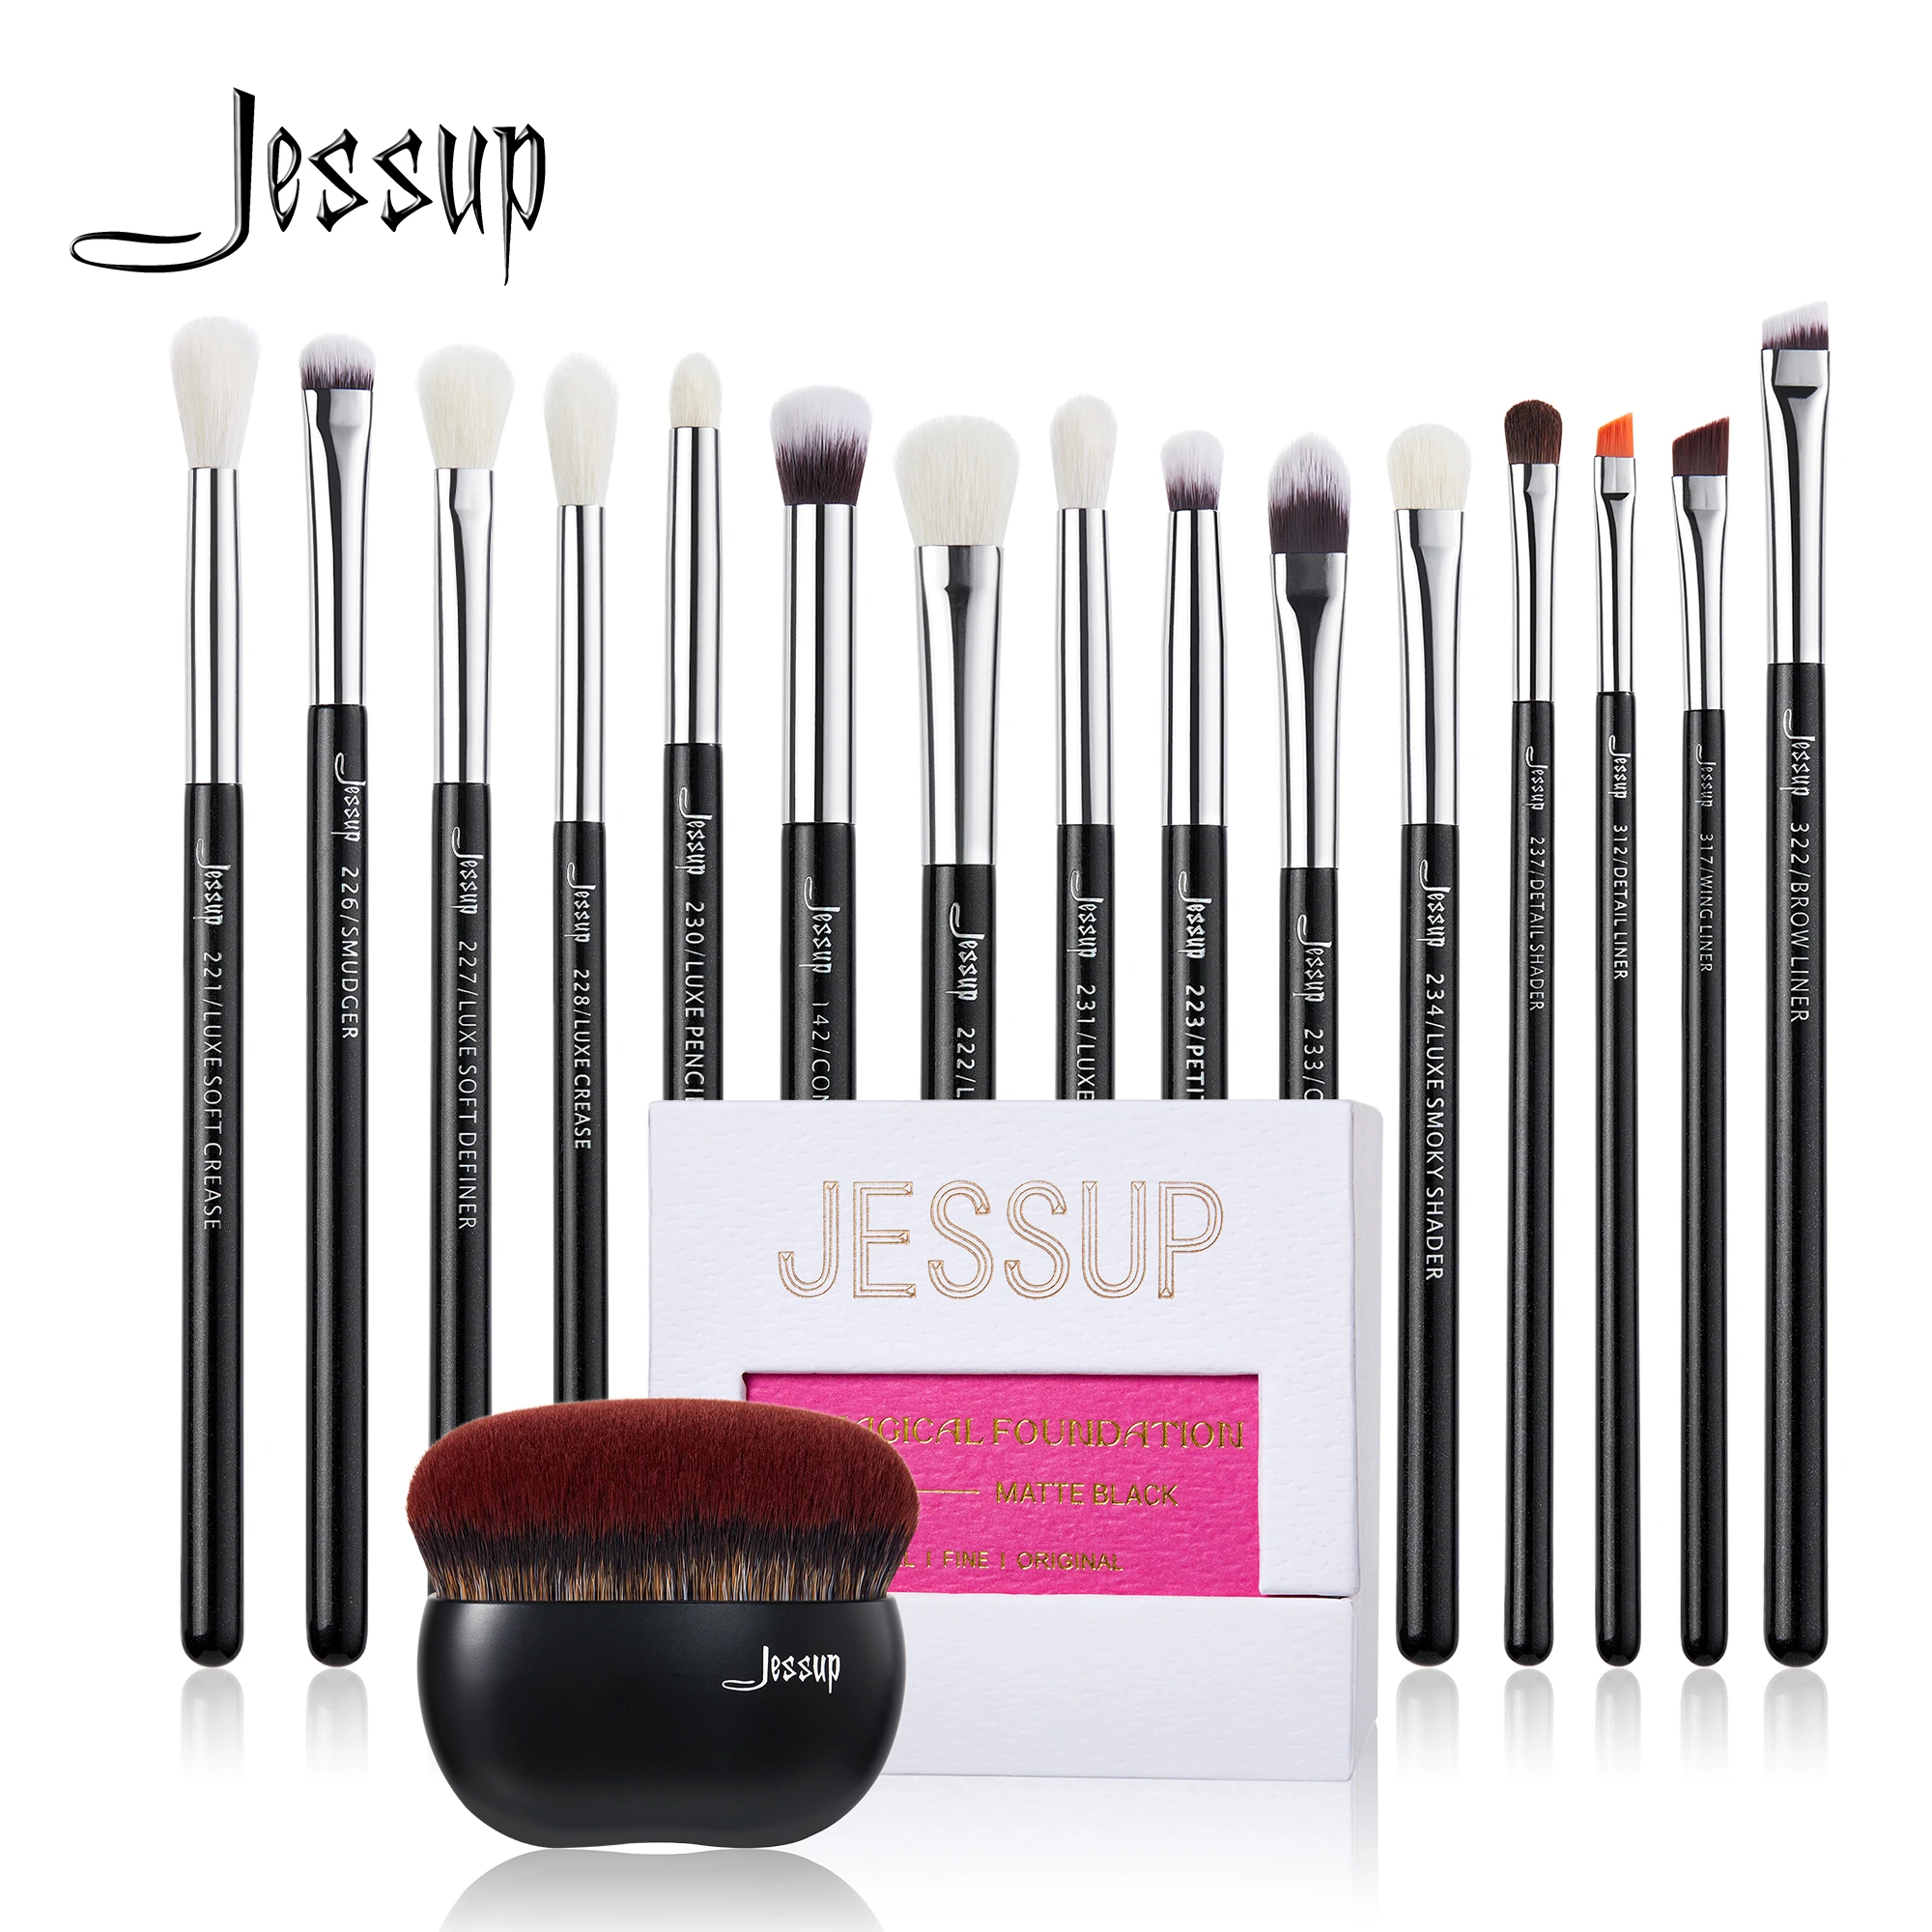 Jessup Makeup Brushes Set Eyeshadow Eye Blending Brow Liner Concealer Brush 15pcs Black/Silver Shader Synthetic Goat Hair